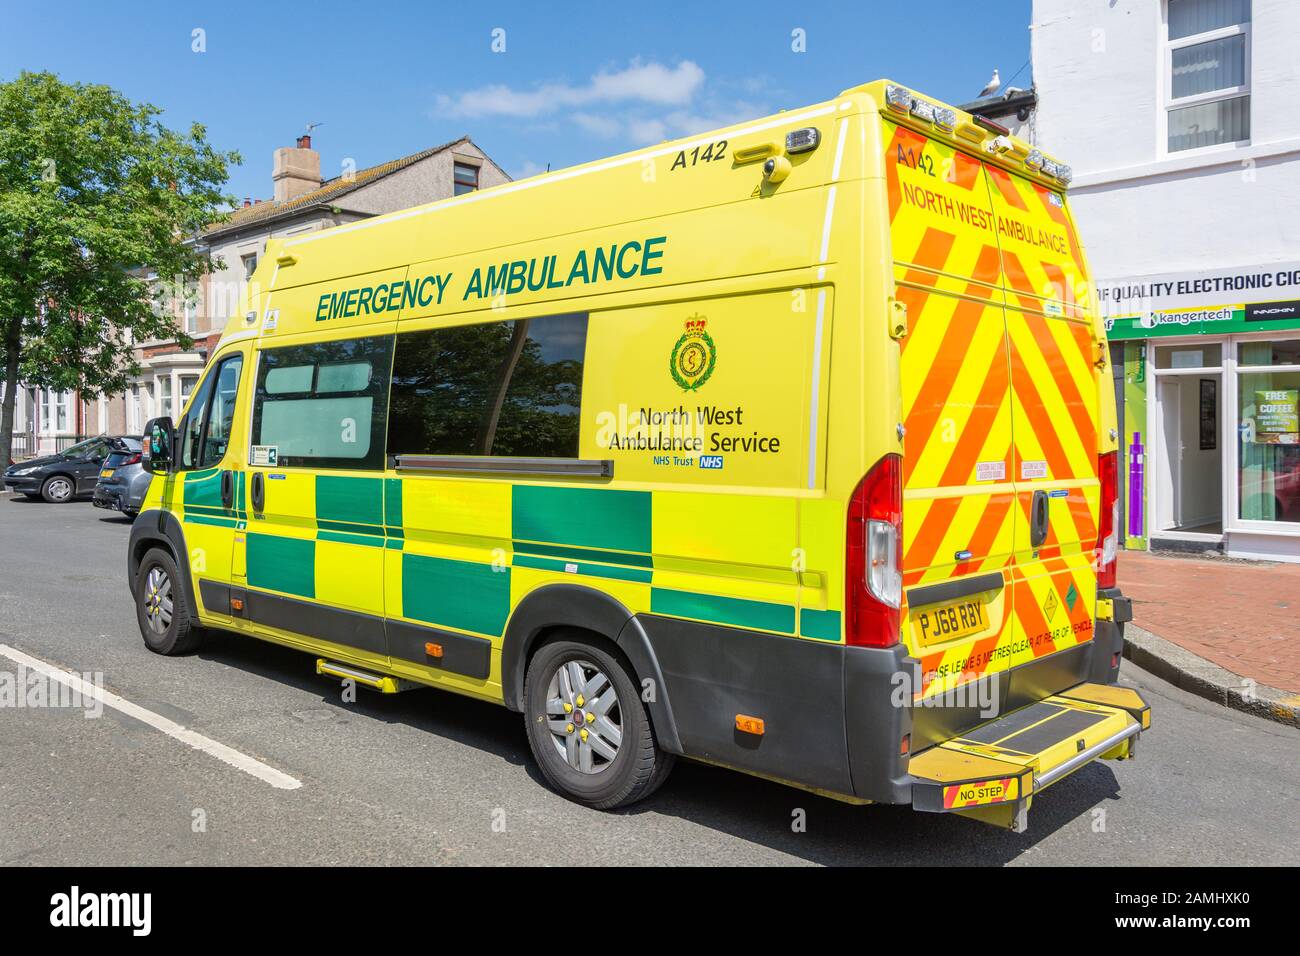 North West Ambulance Service Notfallambulanz auf Abruf, Fleetwood, Lancashire, England, Vereinigtes Königreich Stockfoto